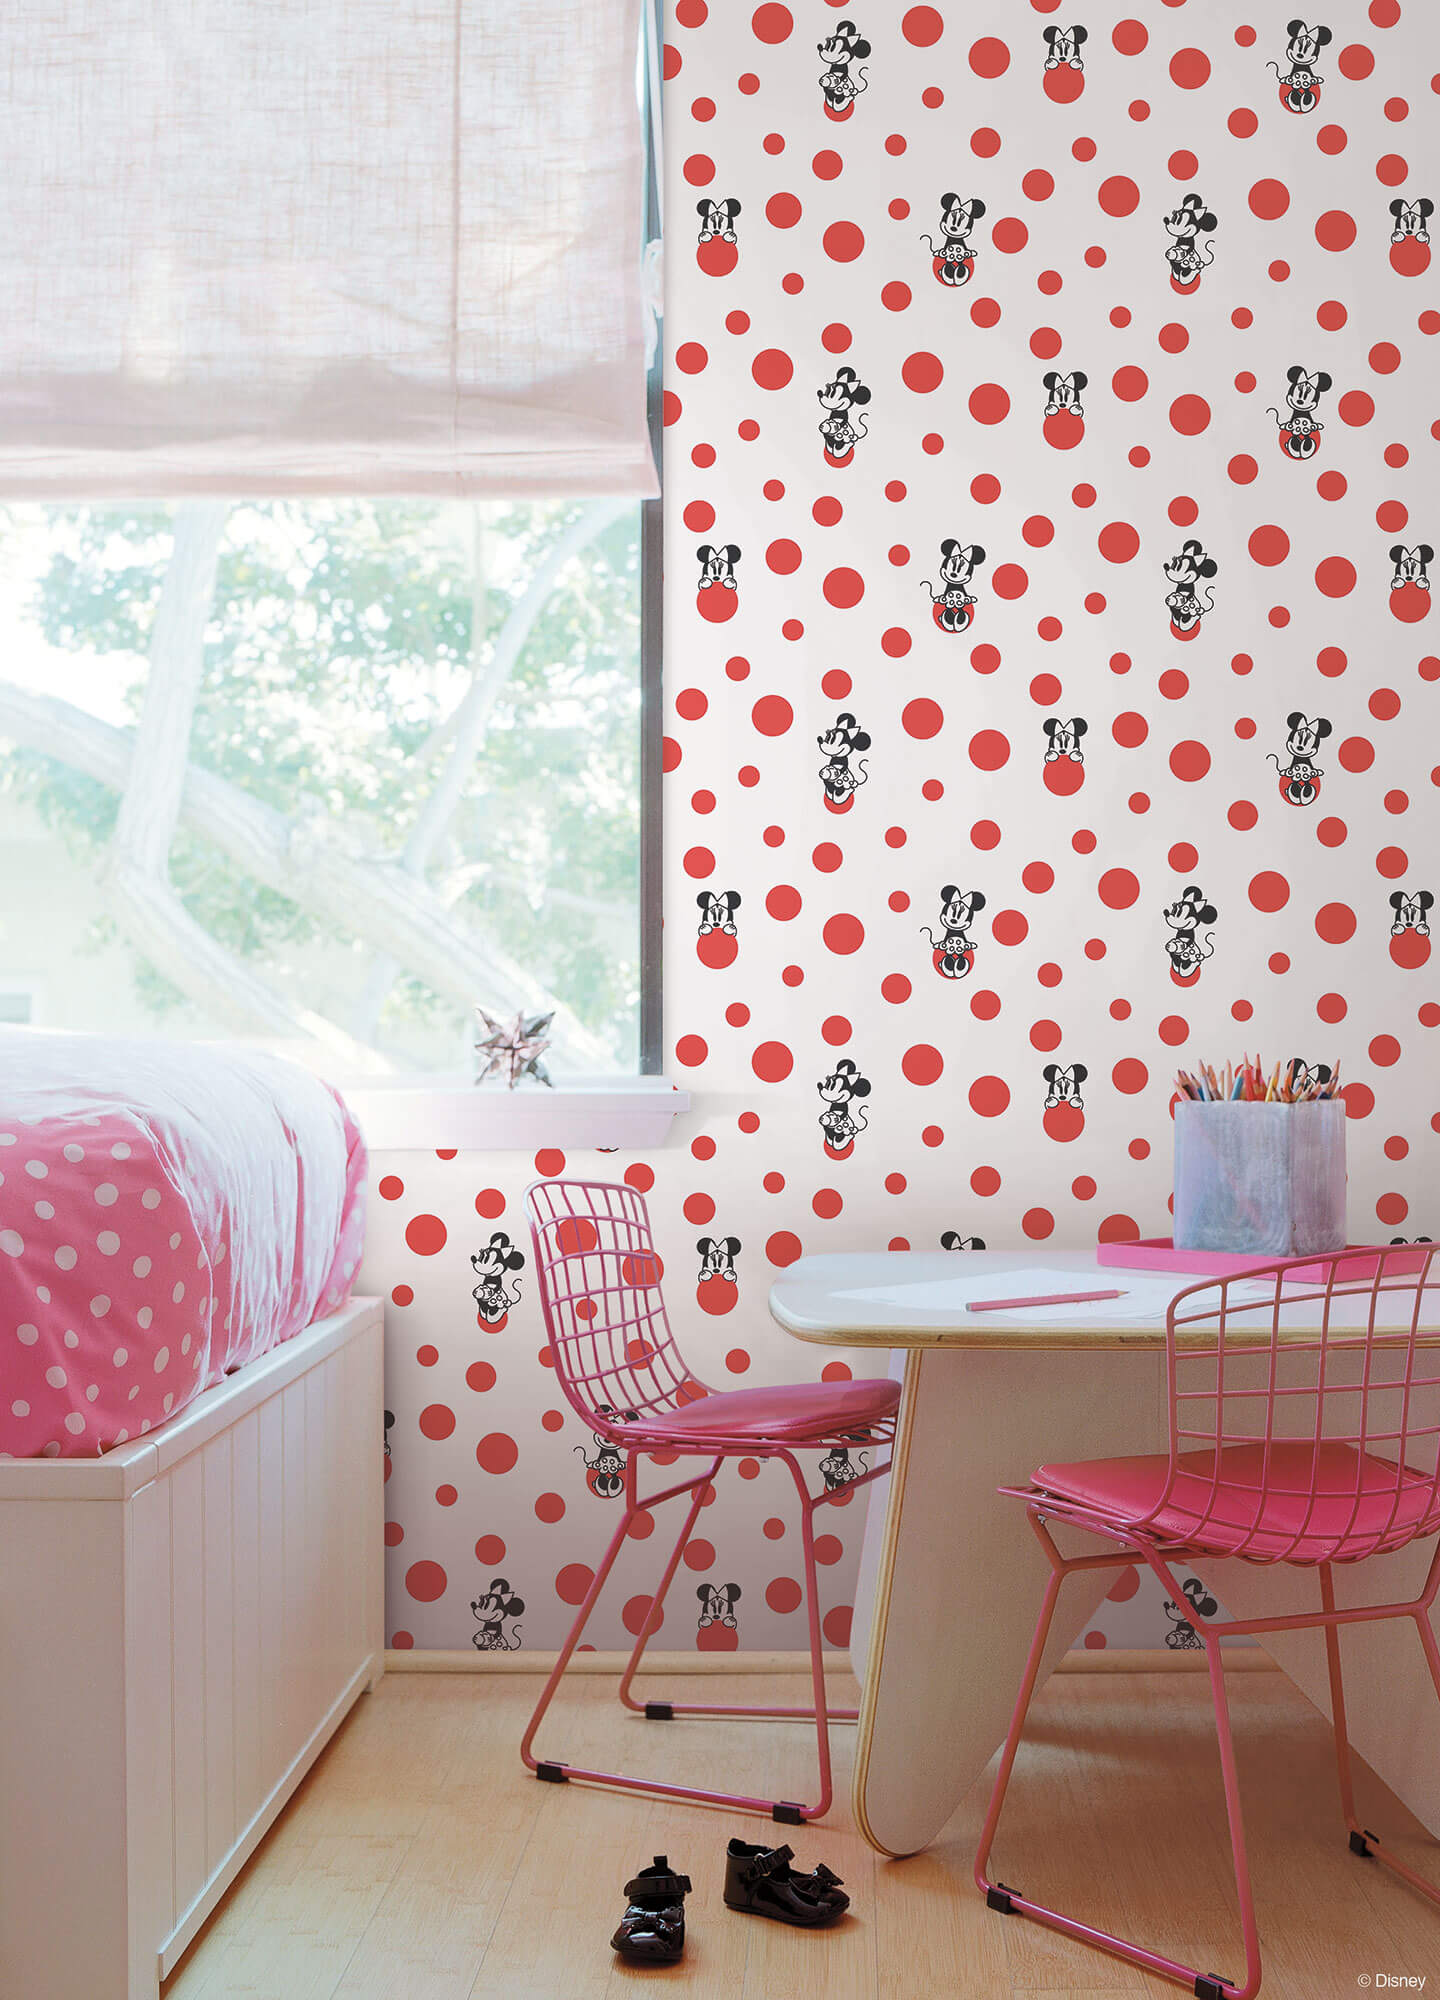 Disney Kids Vol. 4 Minnie Mouse Dots Wallpaper - Red